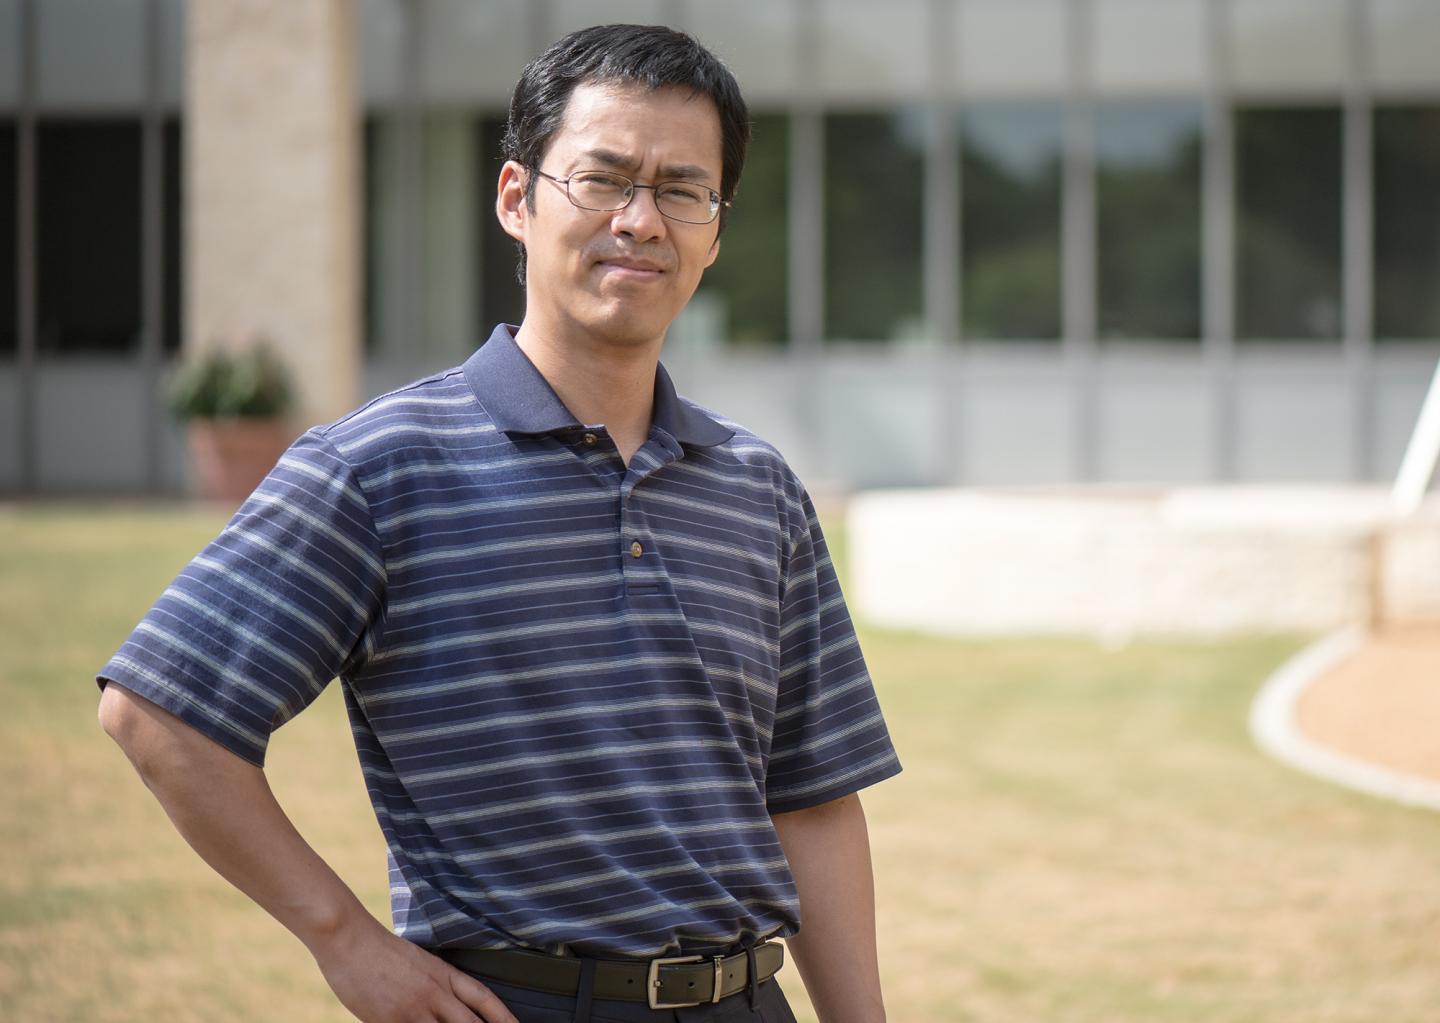 Junzhou Huang, associate professor of computer science and engineering